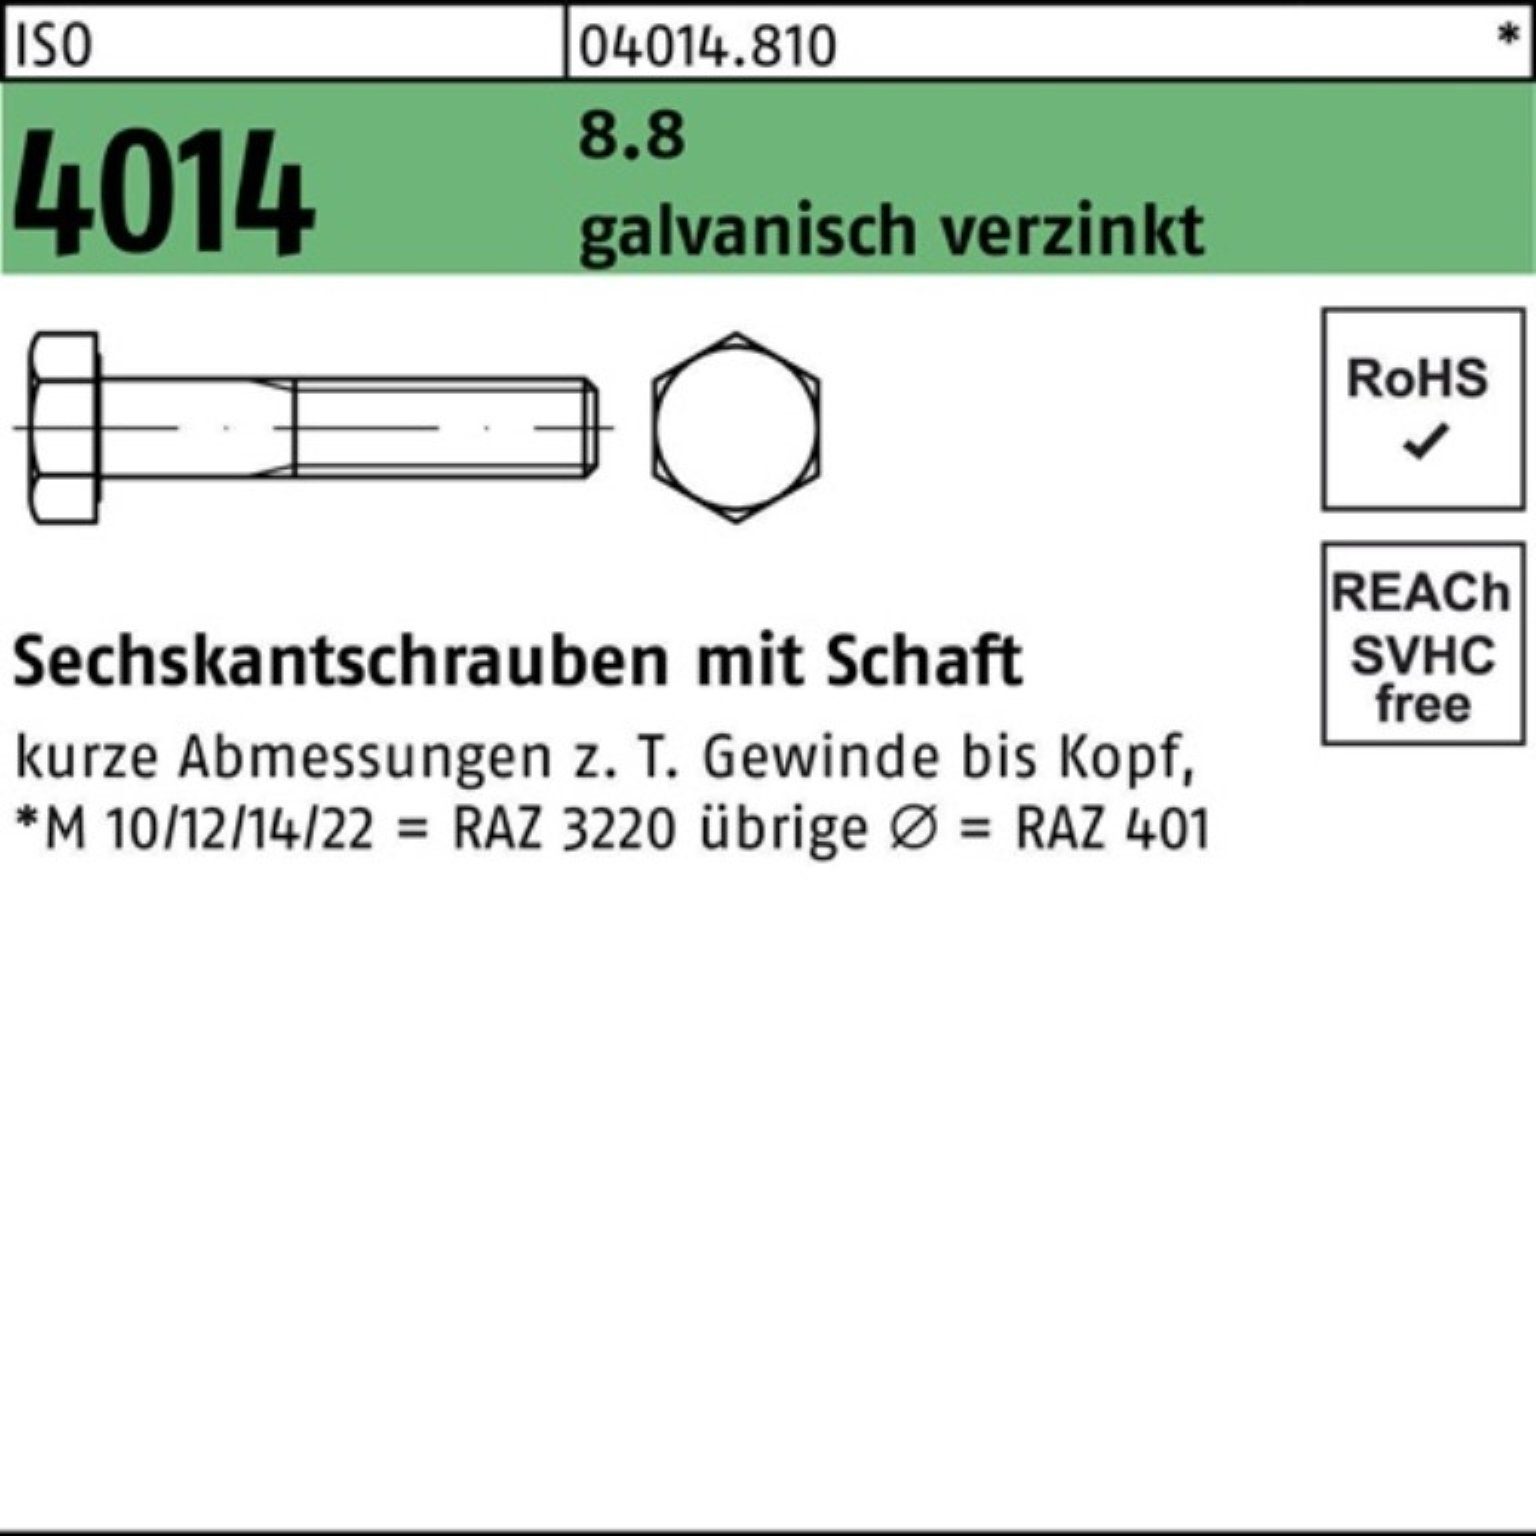 Bufab Sechskantschraube 100er Pack Sechskantschraube ISO 4014 Schaft M12x 300 8.8 galv.verz. 2 | Schrauben